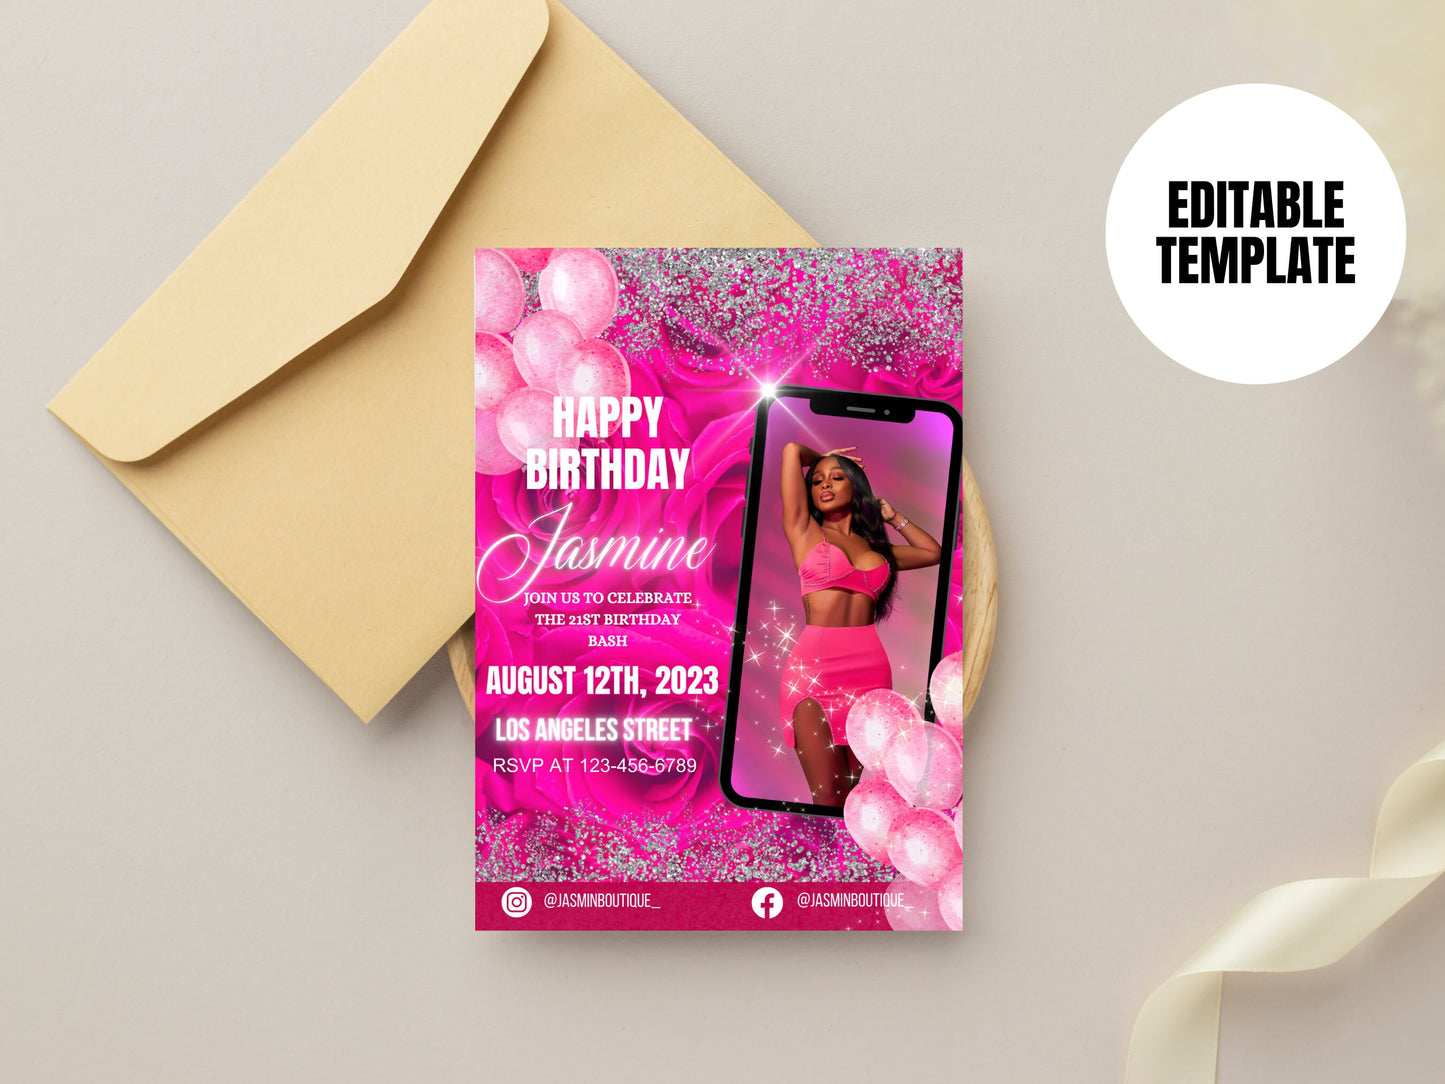 Birthday Bash invite, Digital Bday card, DIY invite Template Design, Birthday Party Invites Flyer, Premade Celebration birthday invite